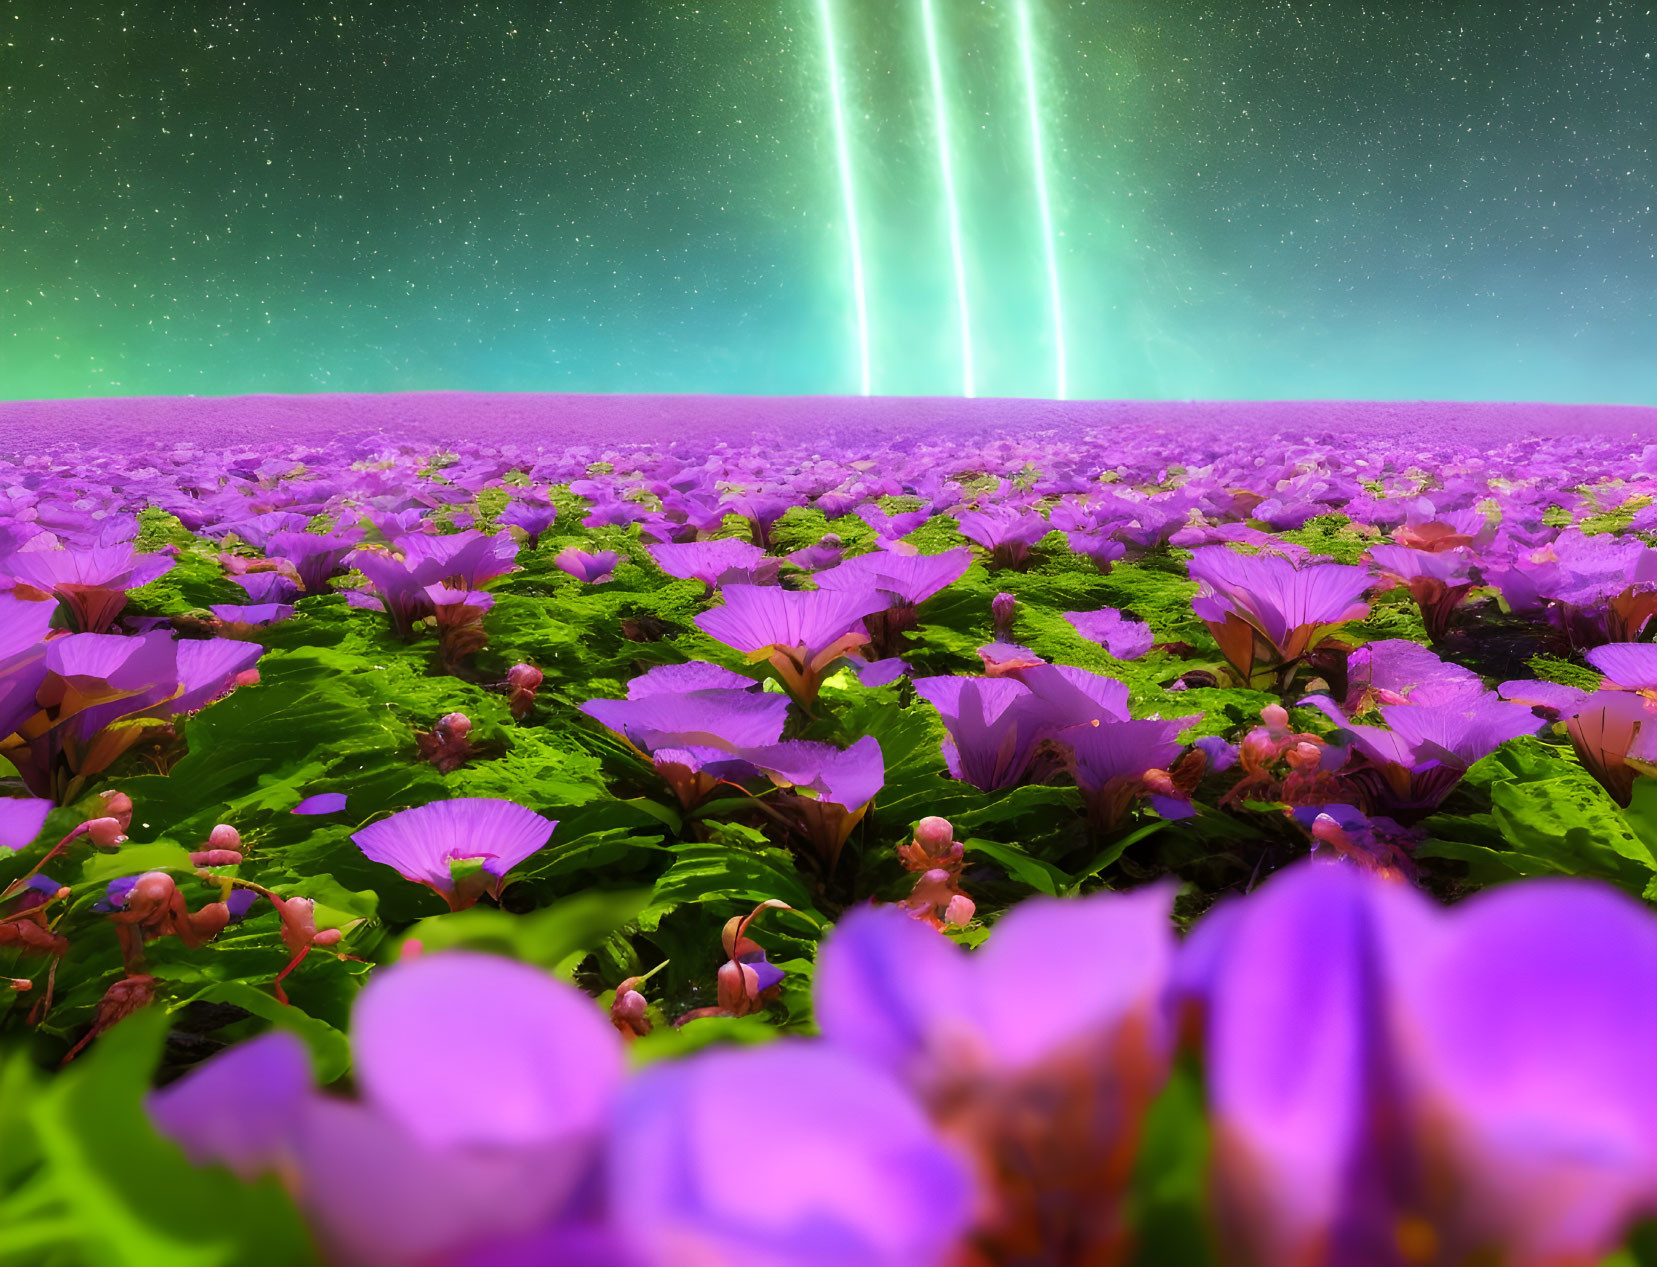 Purple Flowers Field Under Starry Sky with Aurora Borealis